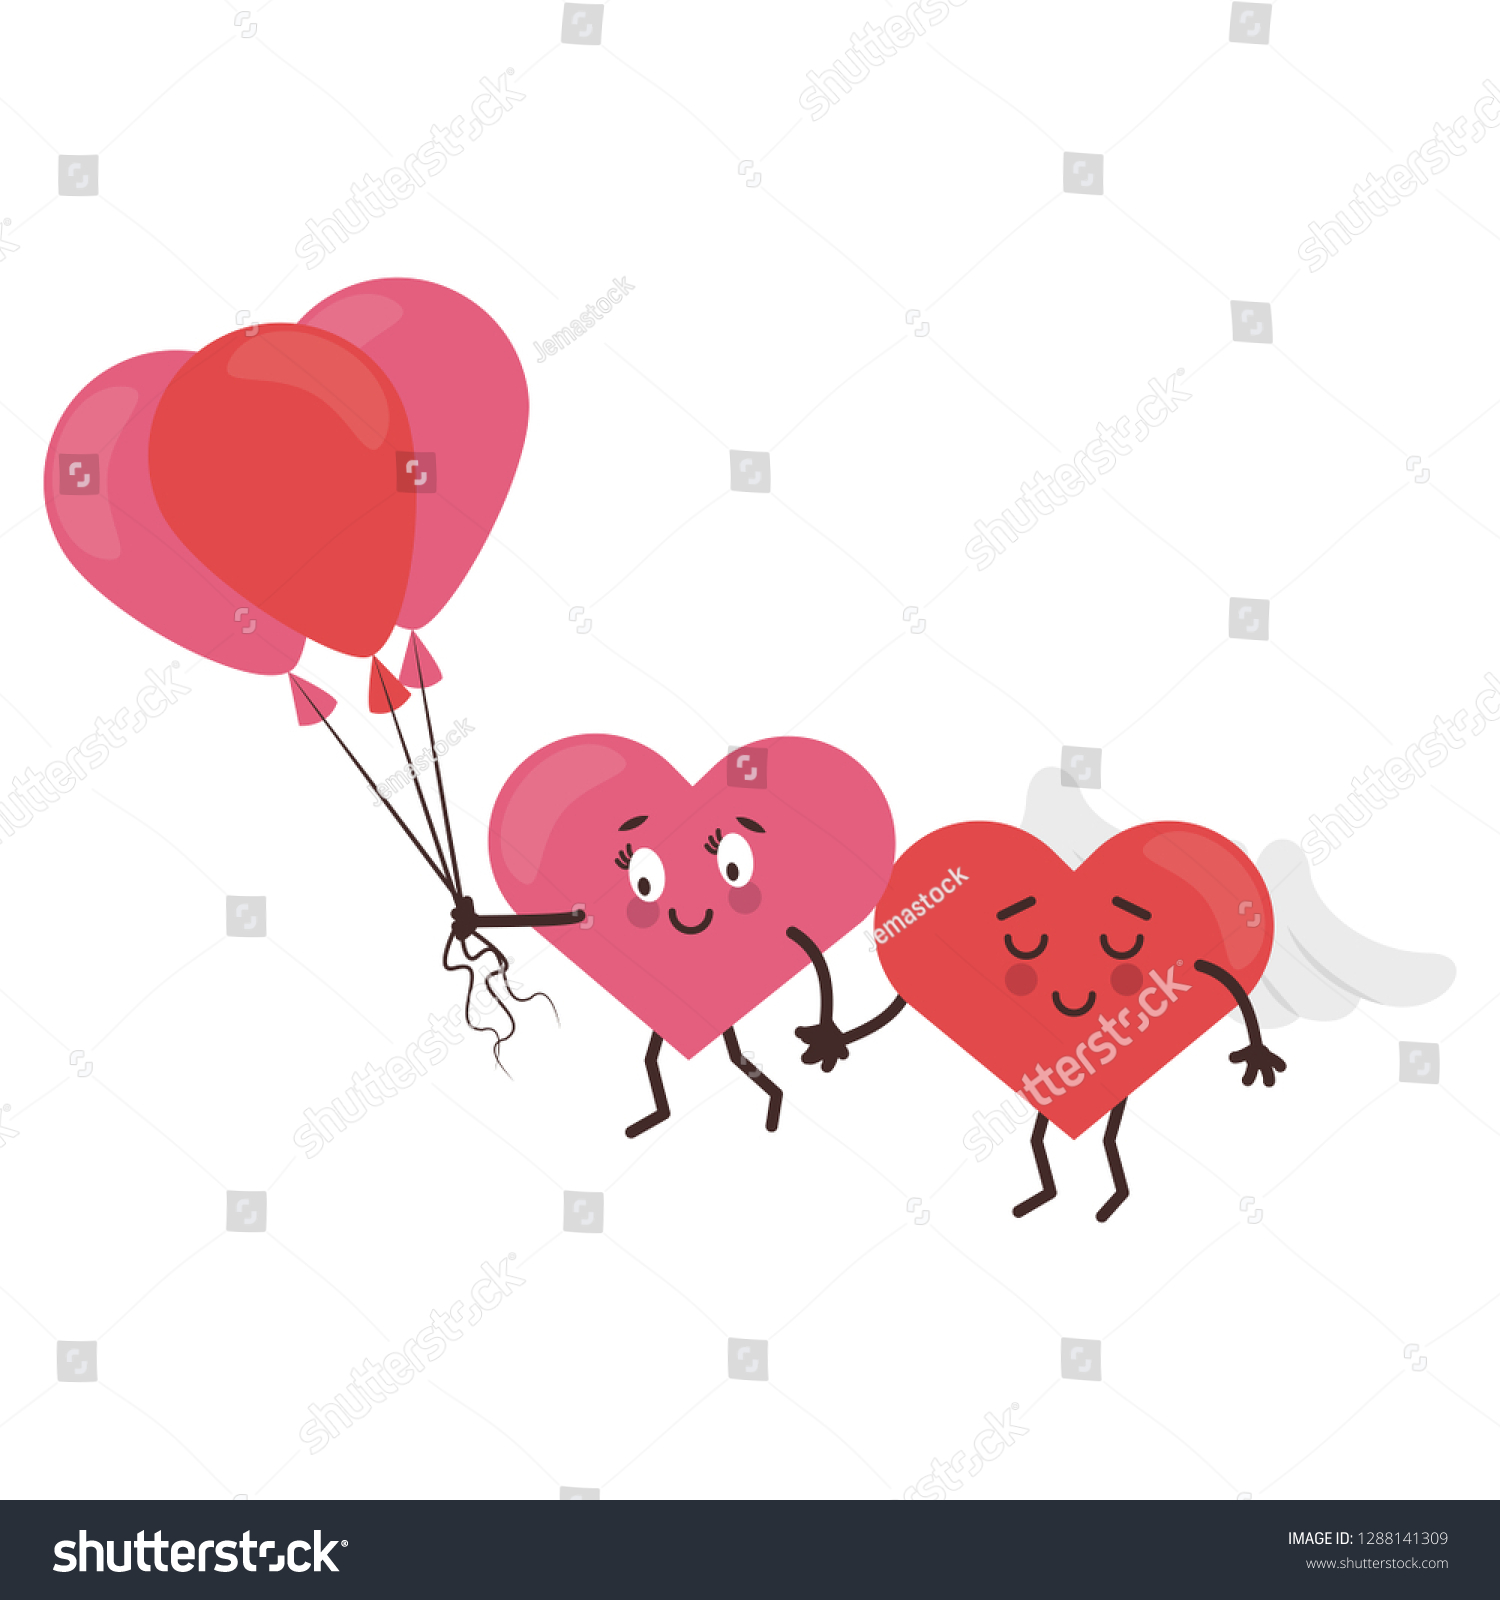 Cute Hearts Love Cartoons Stock Vector Royalty Free 1288141309 Shutterstock